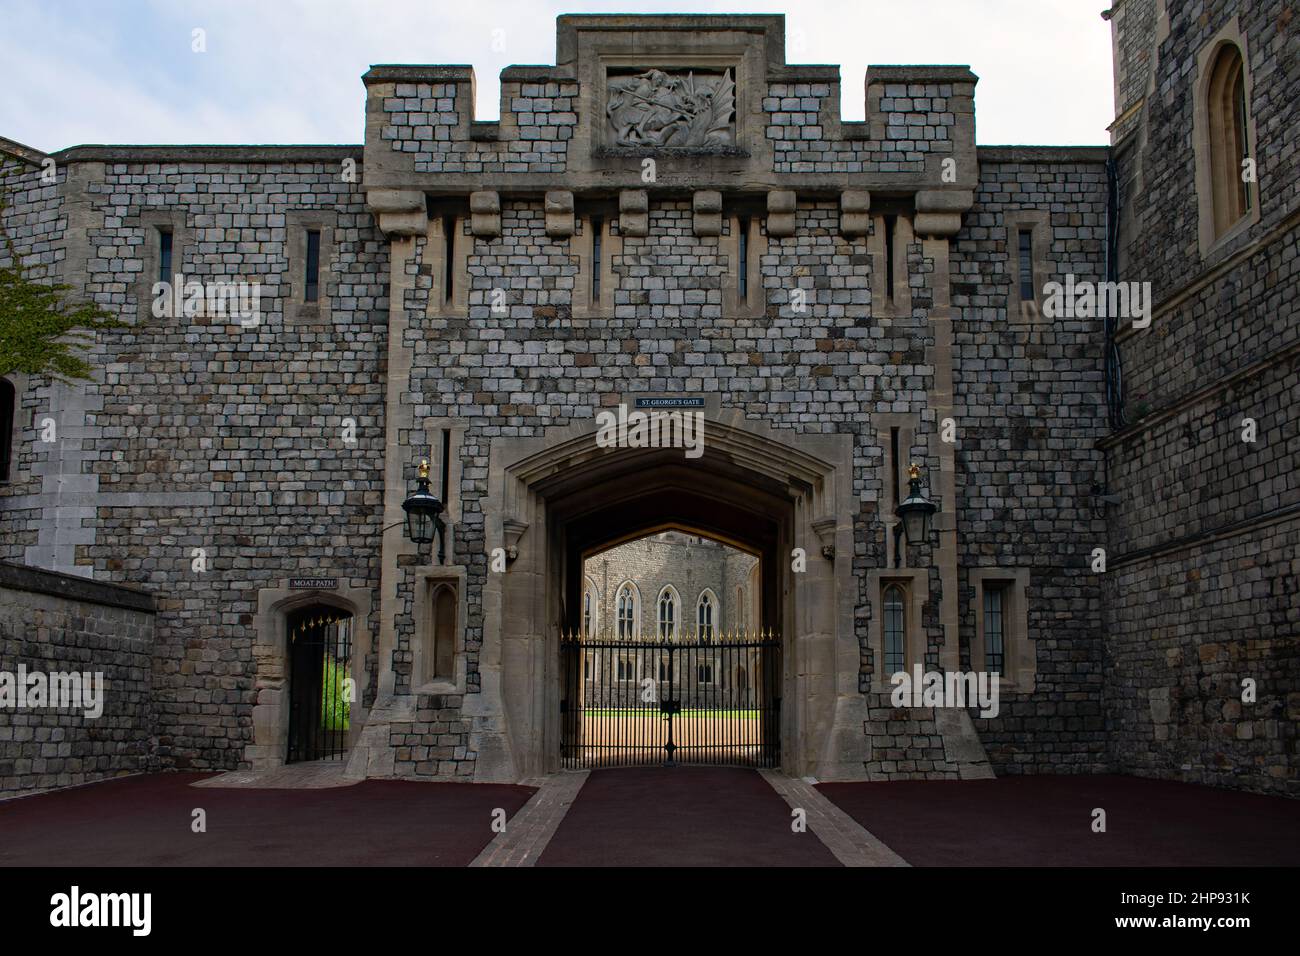 St George's Gateway leading towards the Upper ward in Windsor Castle, Berkshire, England. Stock Photo